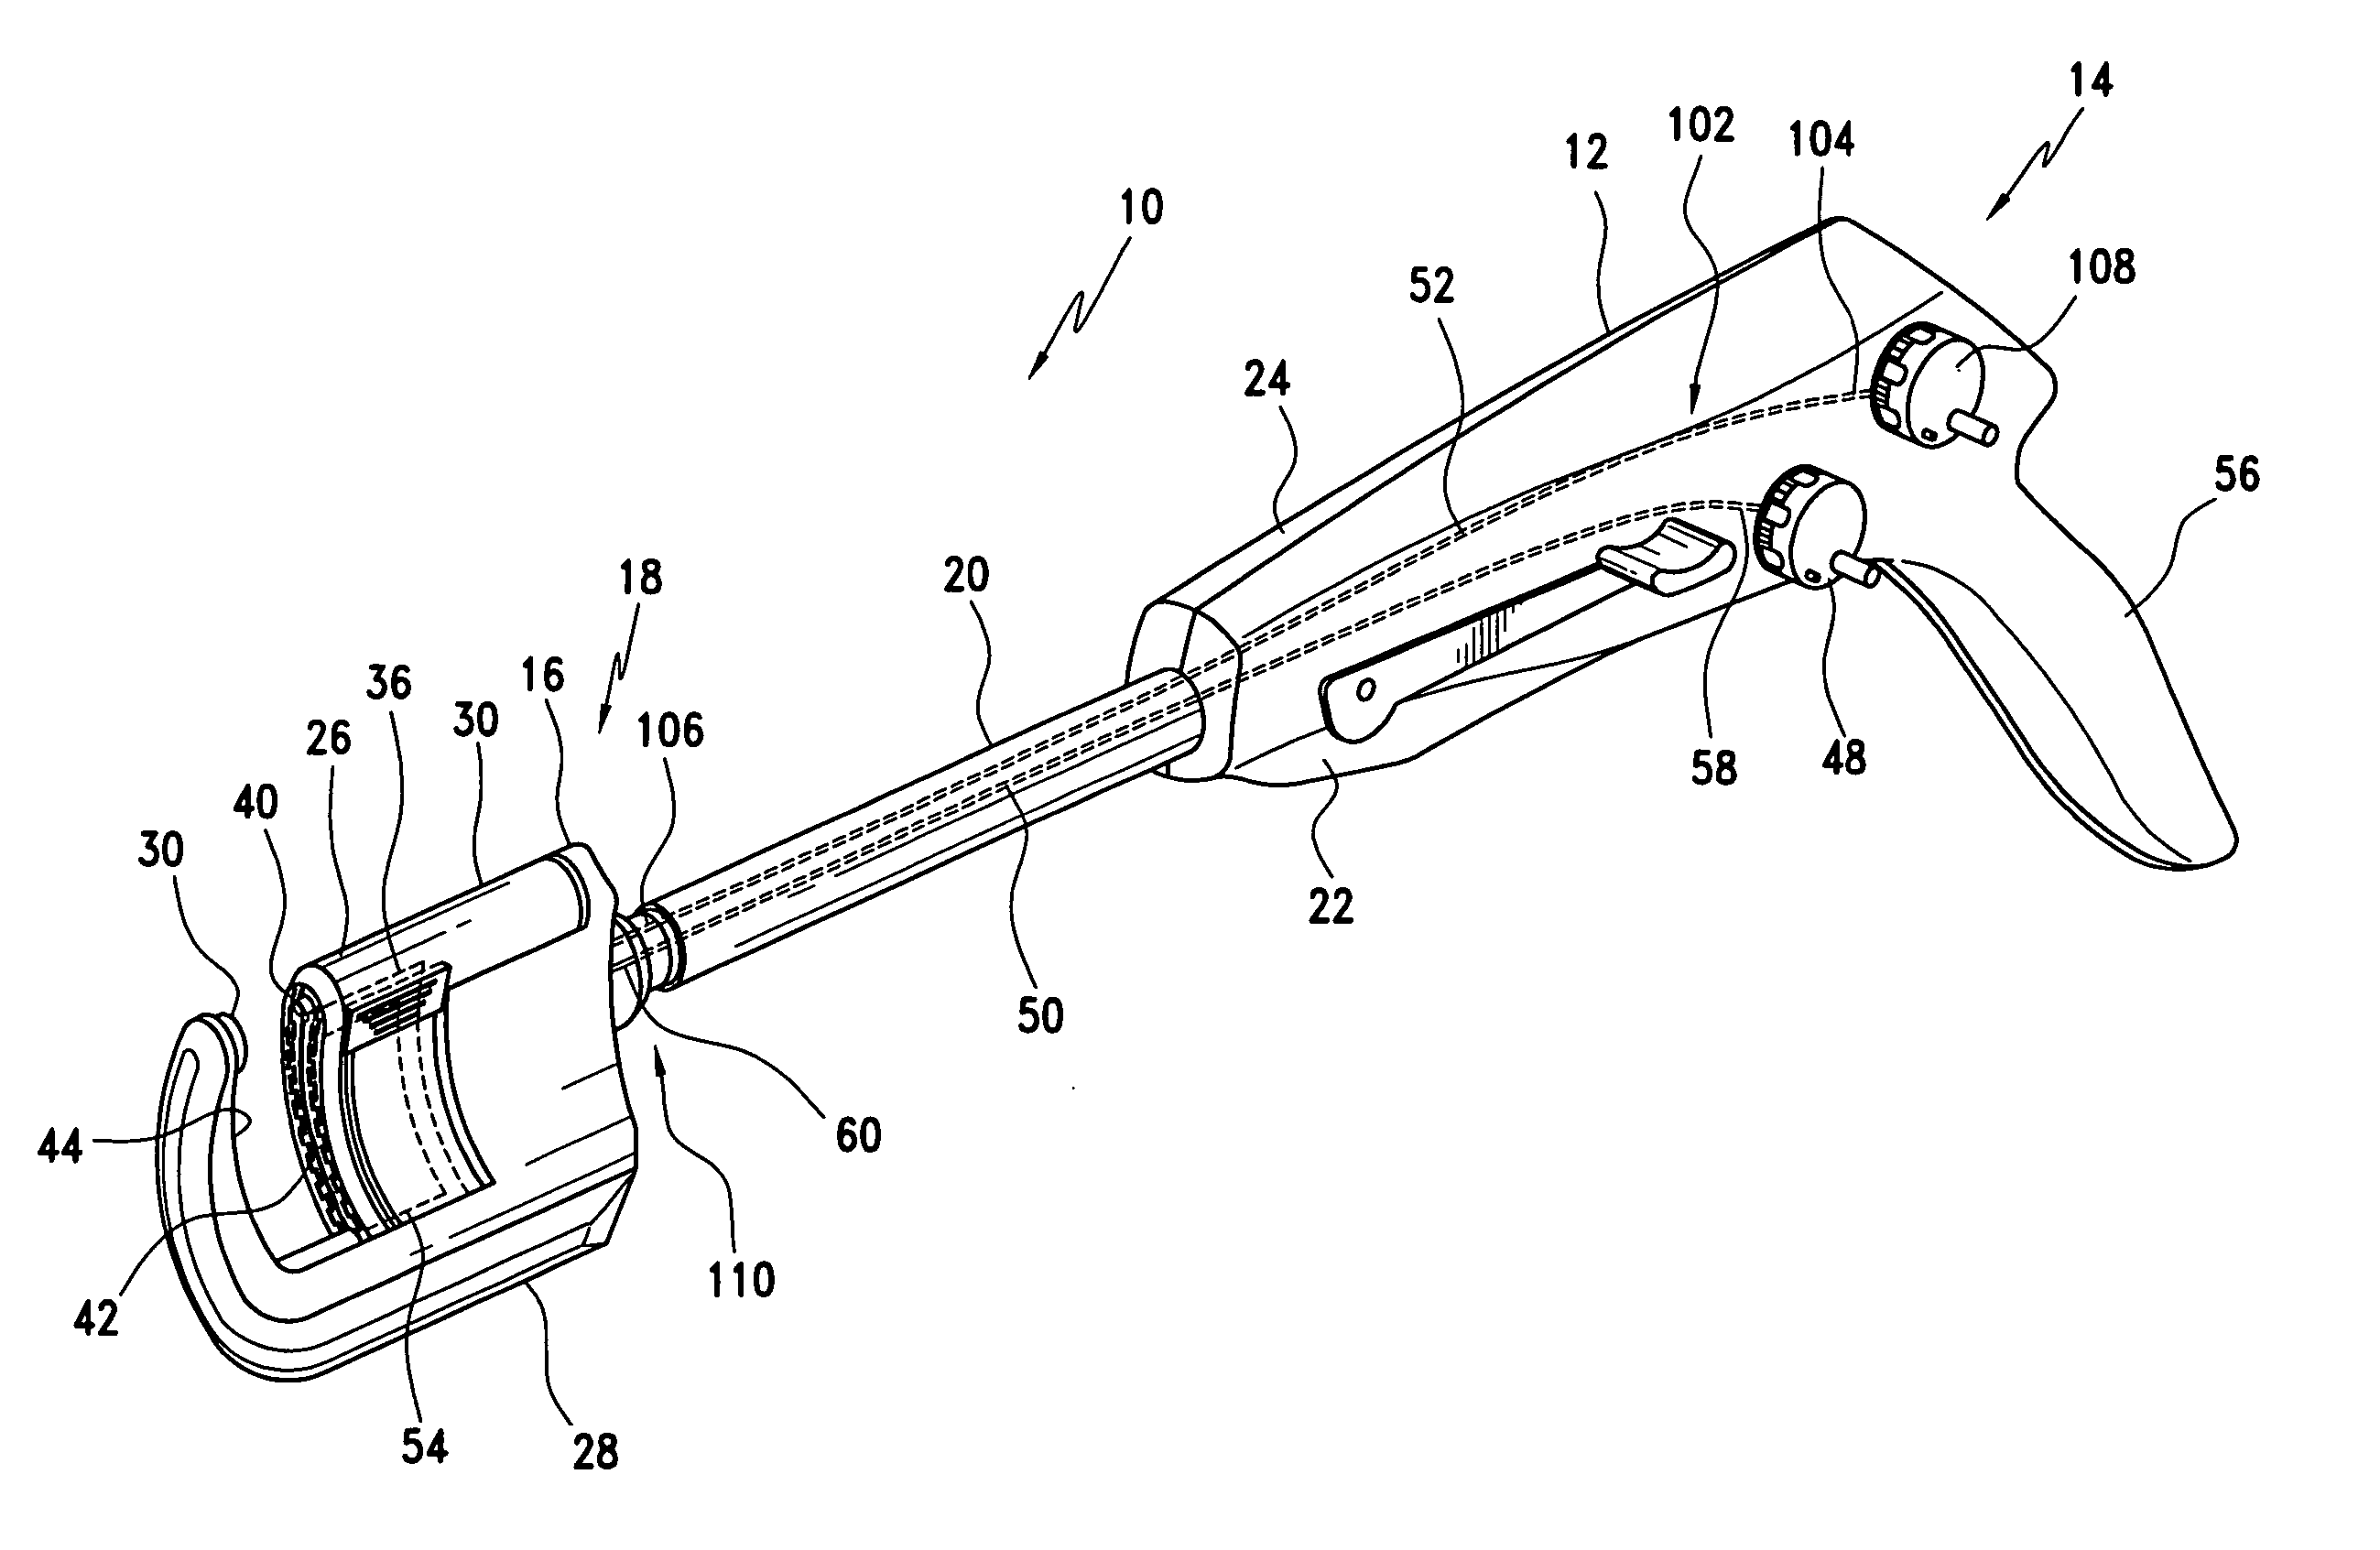 Articulating curved cutter stapler